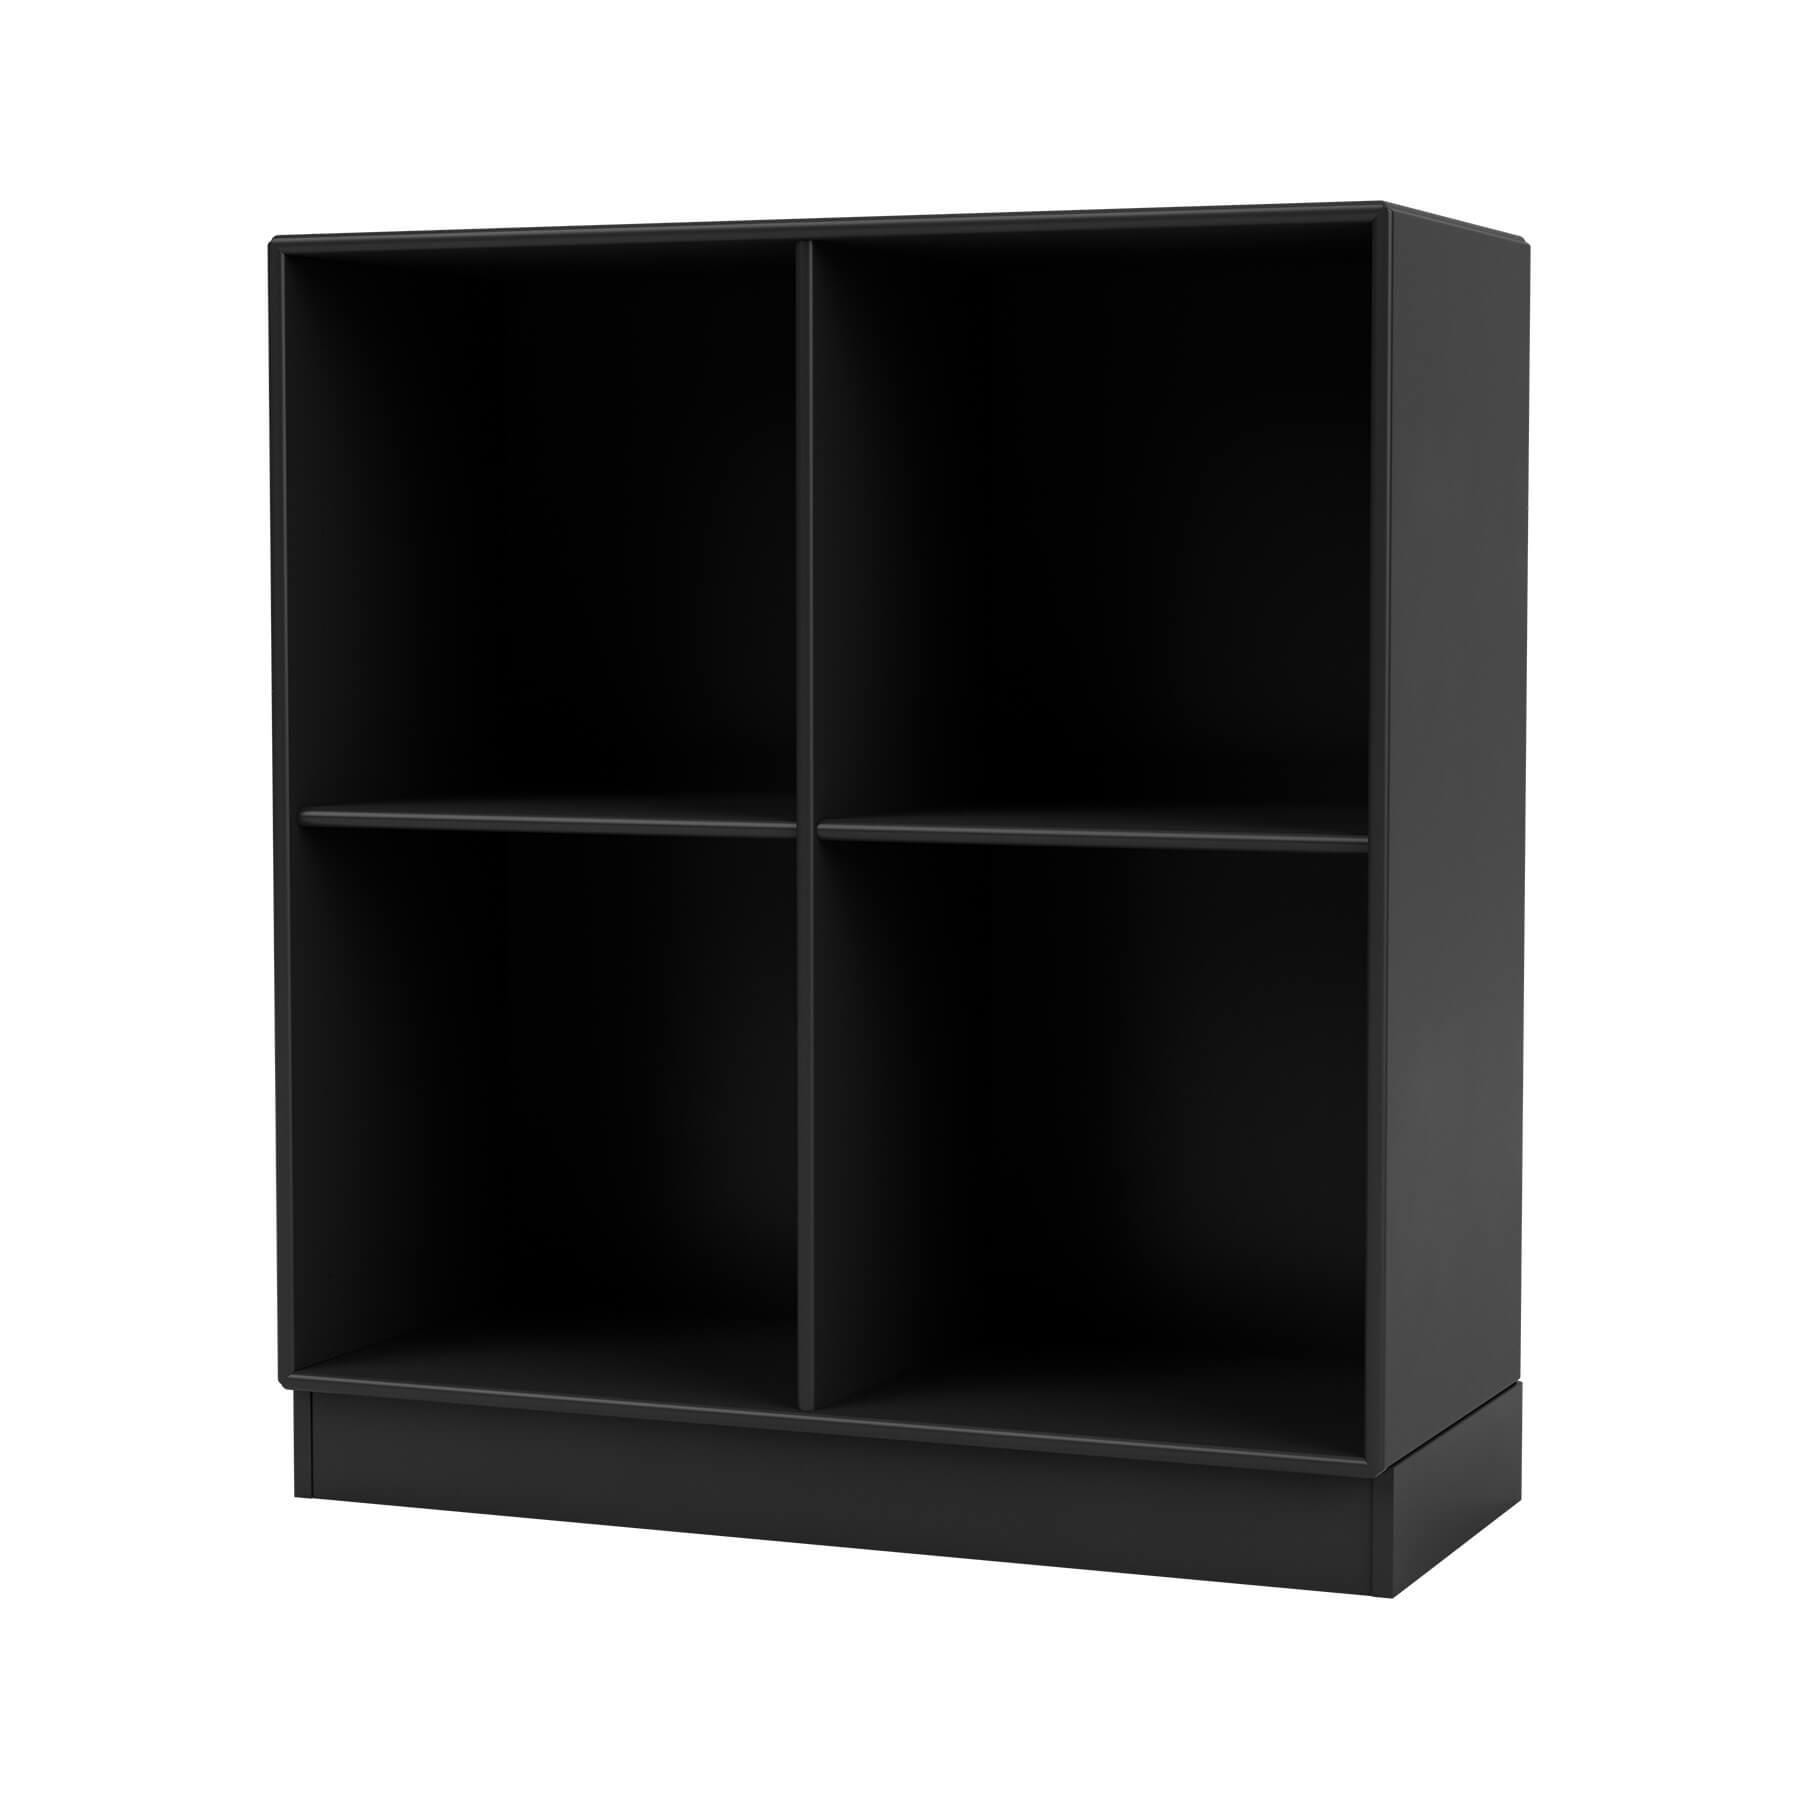 Montana Show Bookcase Black Plinth Black Designer Furniture From Holloways Of Ludlow